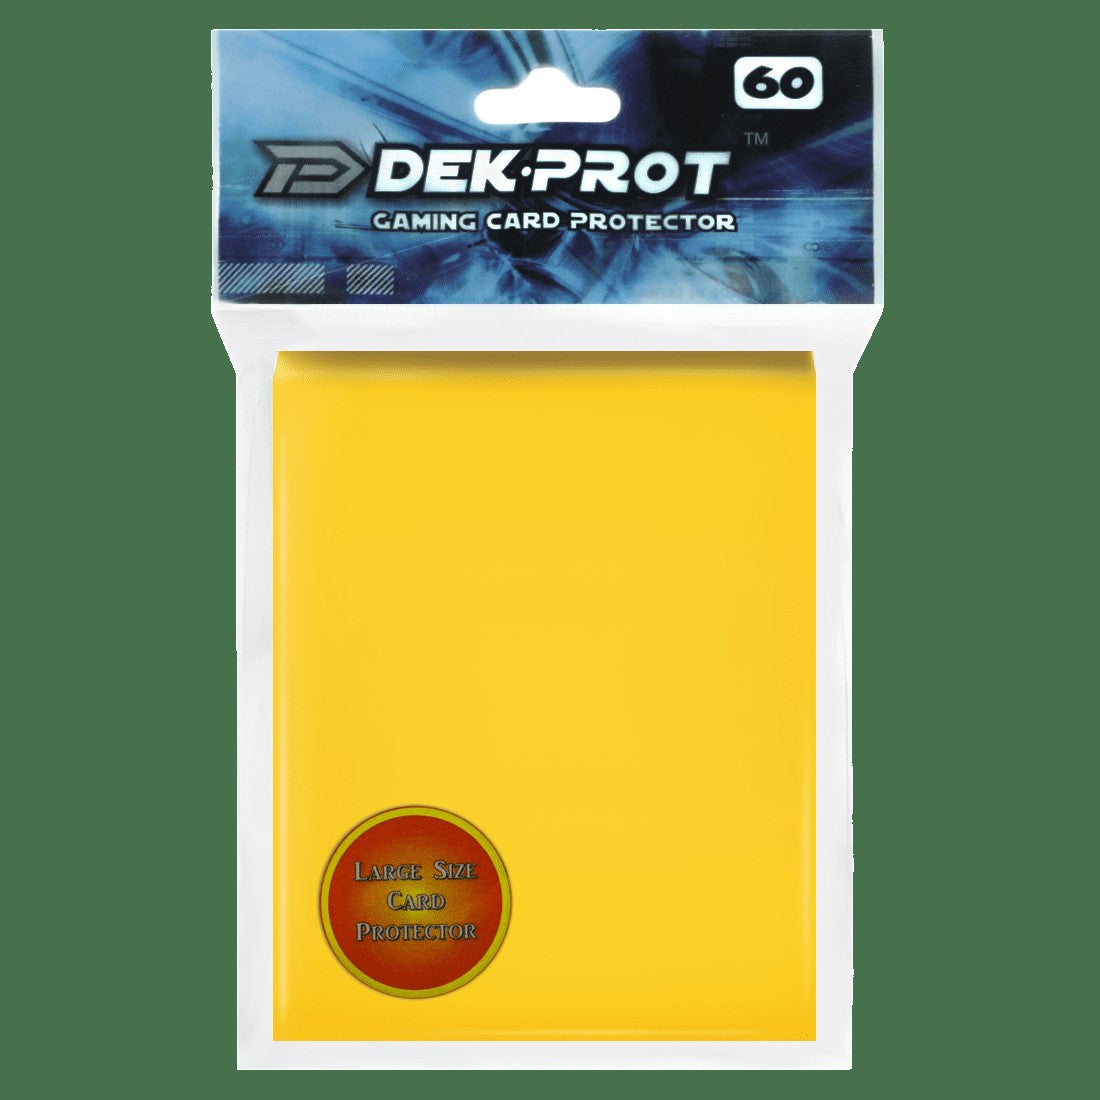 Dek Prot Standard Sized Card Sleeves - Sunflower Yellow (60 Card Sleeves)